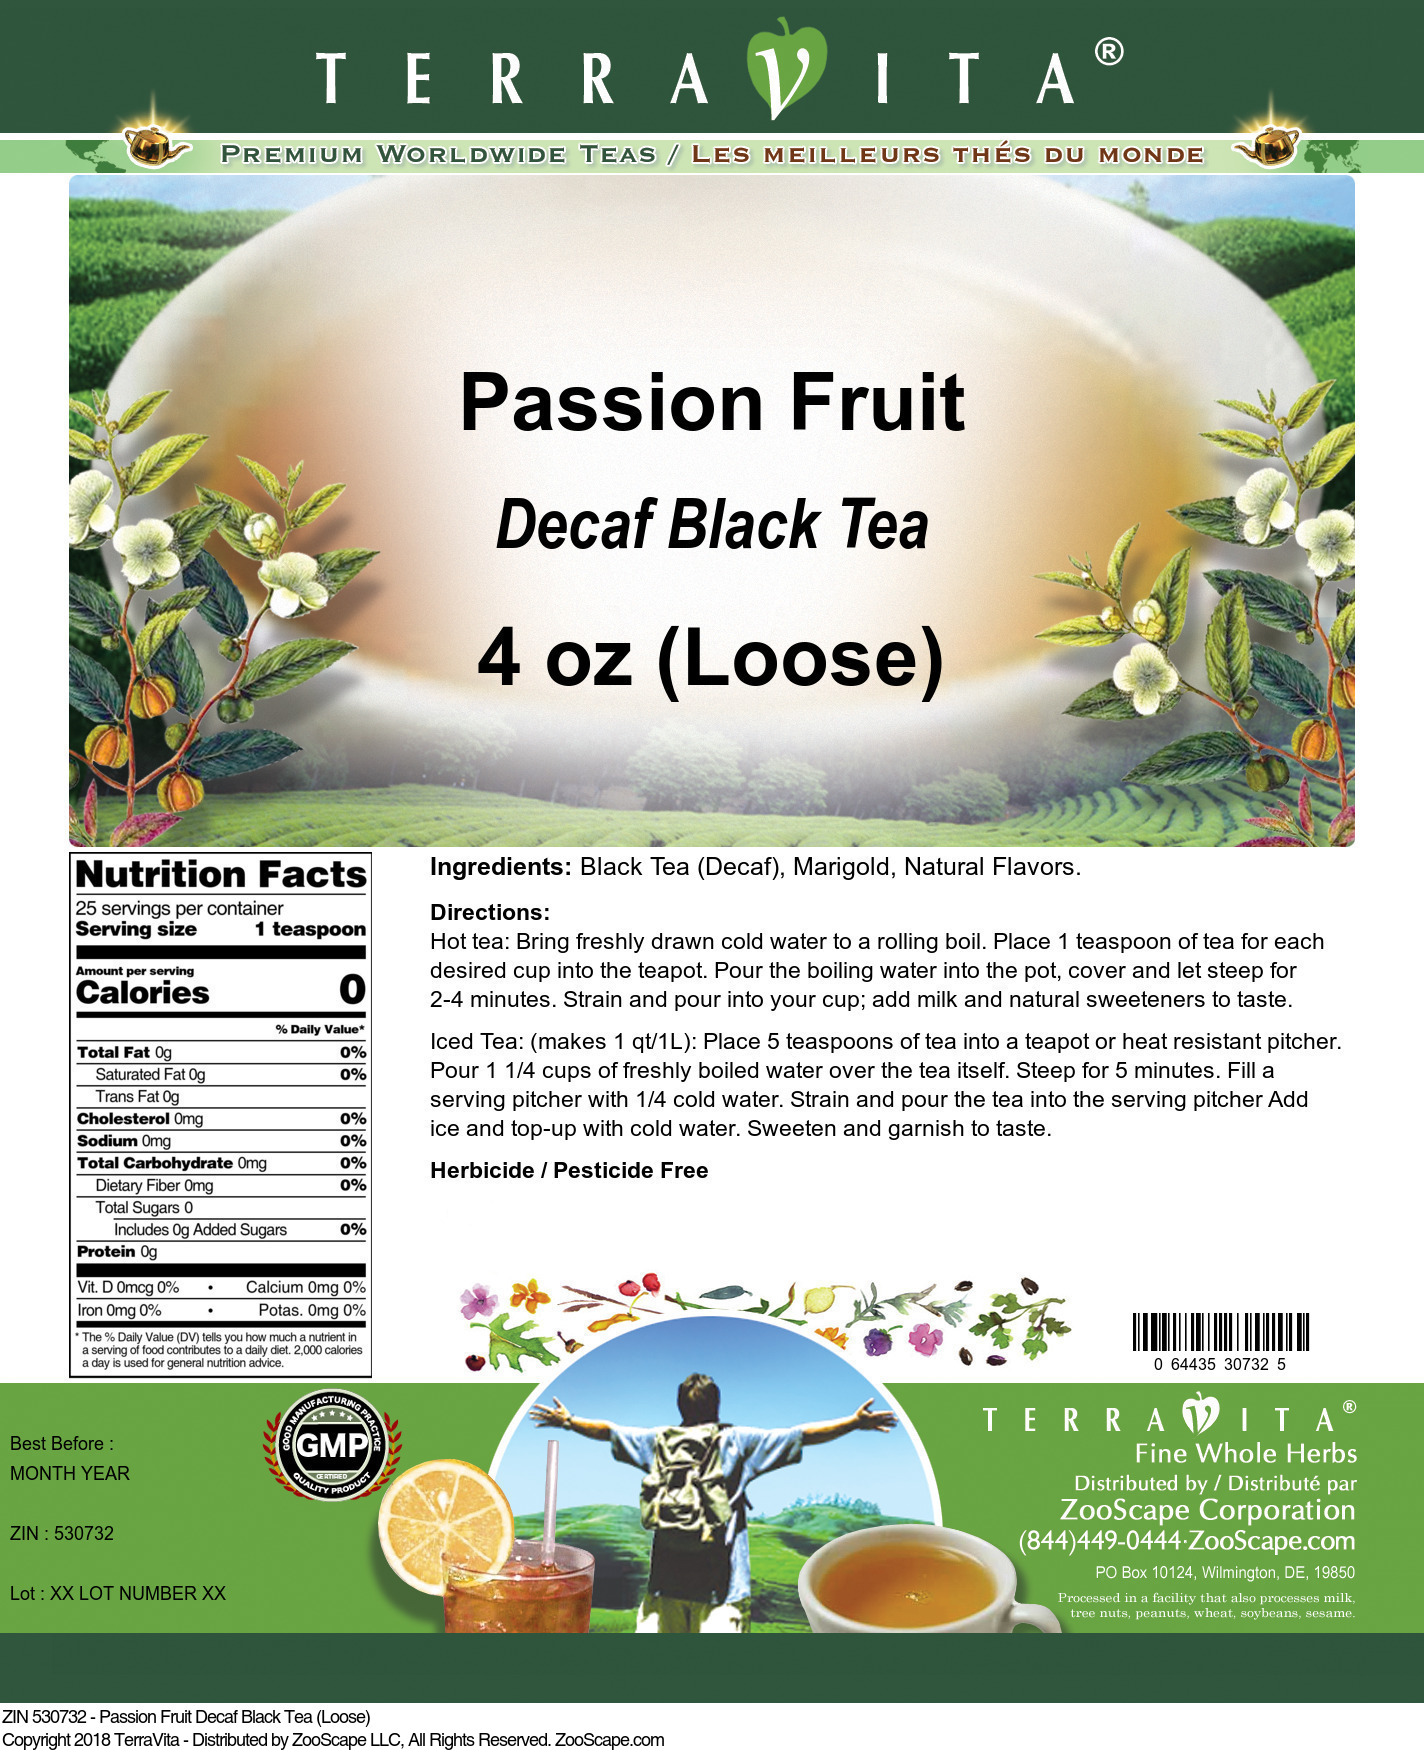 Passion Fruit Decaf Black Tea (Loose) - Label